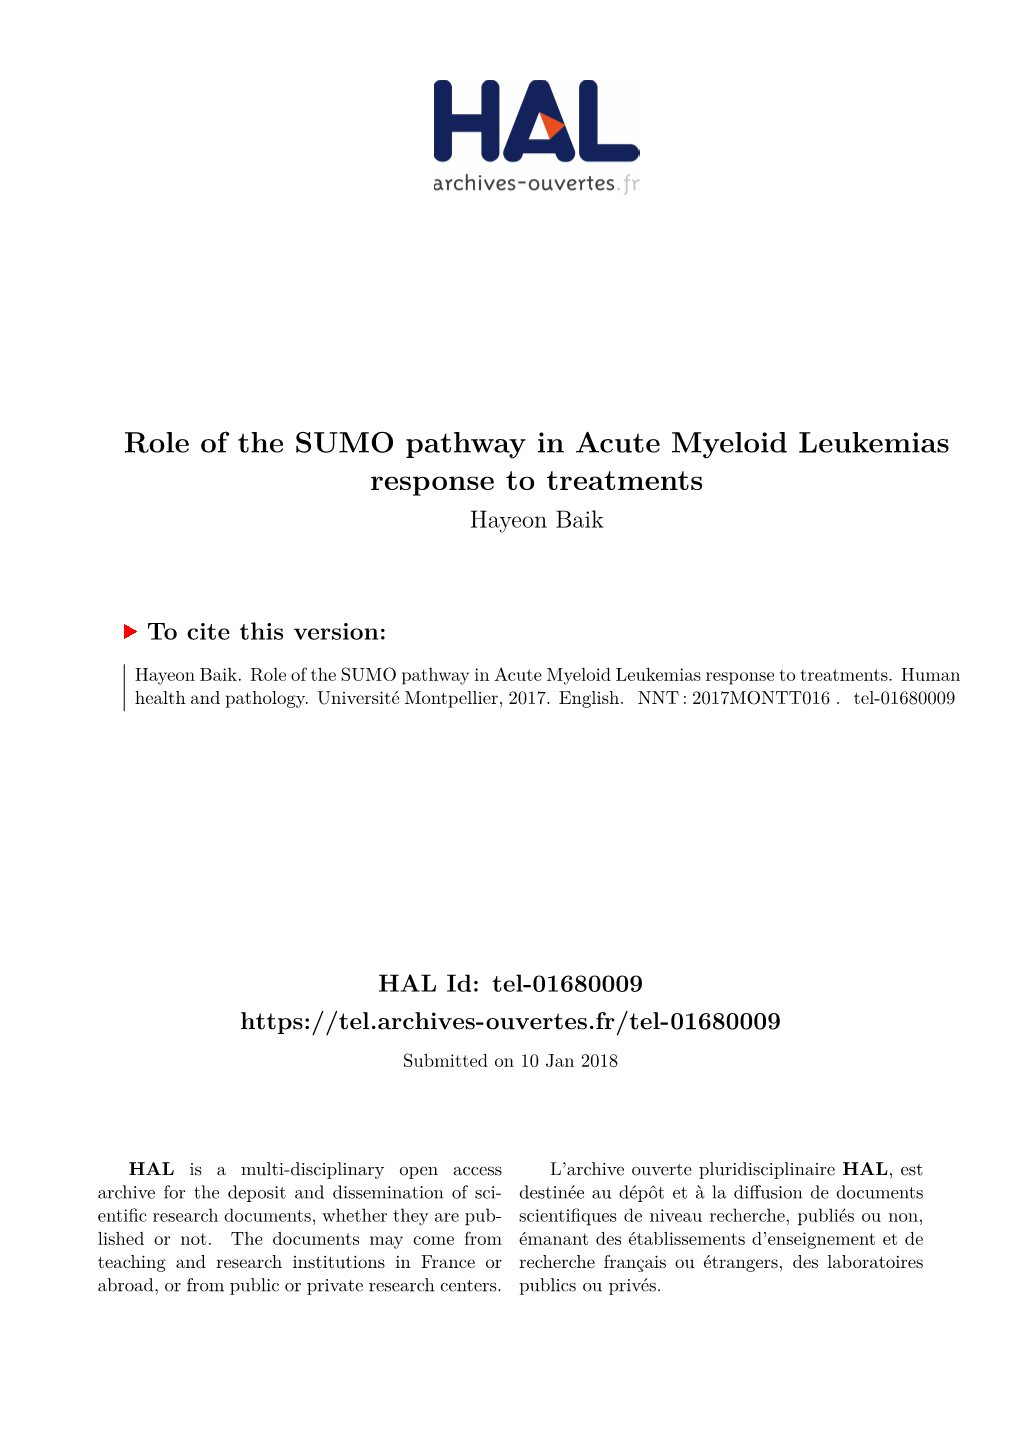 Role of the SUMO Pathway in Acute Myeloid Leukemias Response to Treatments Hayeon Baik